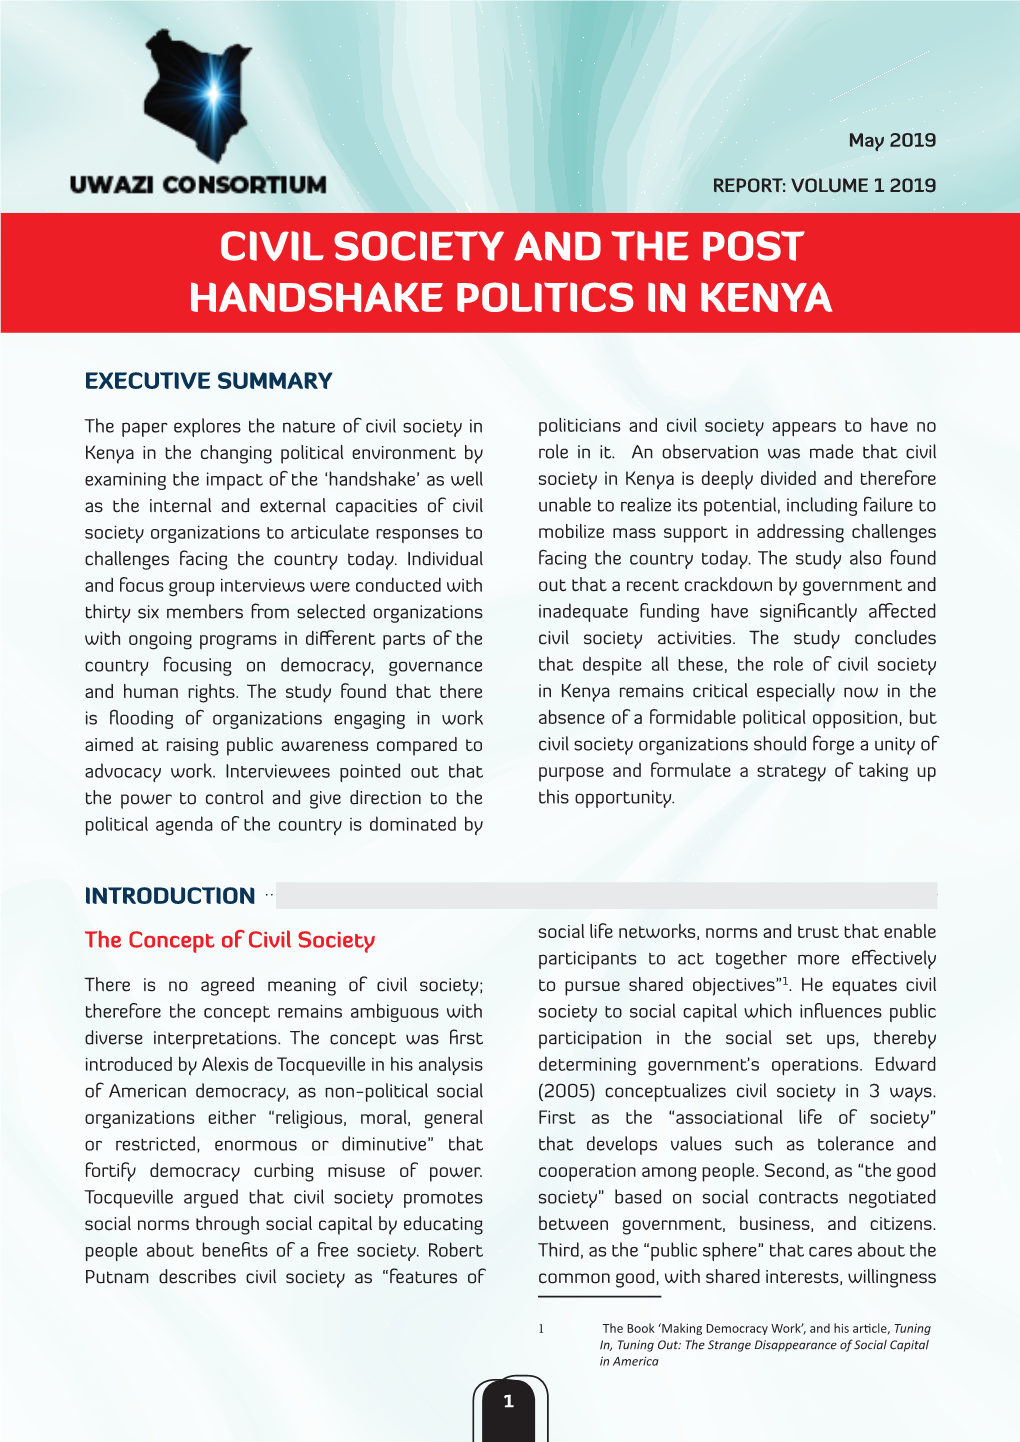 Civil Society and the Post Handshake Politics in Kenya